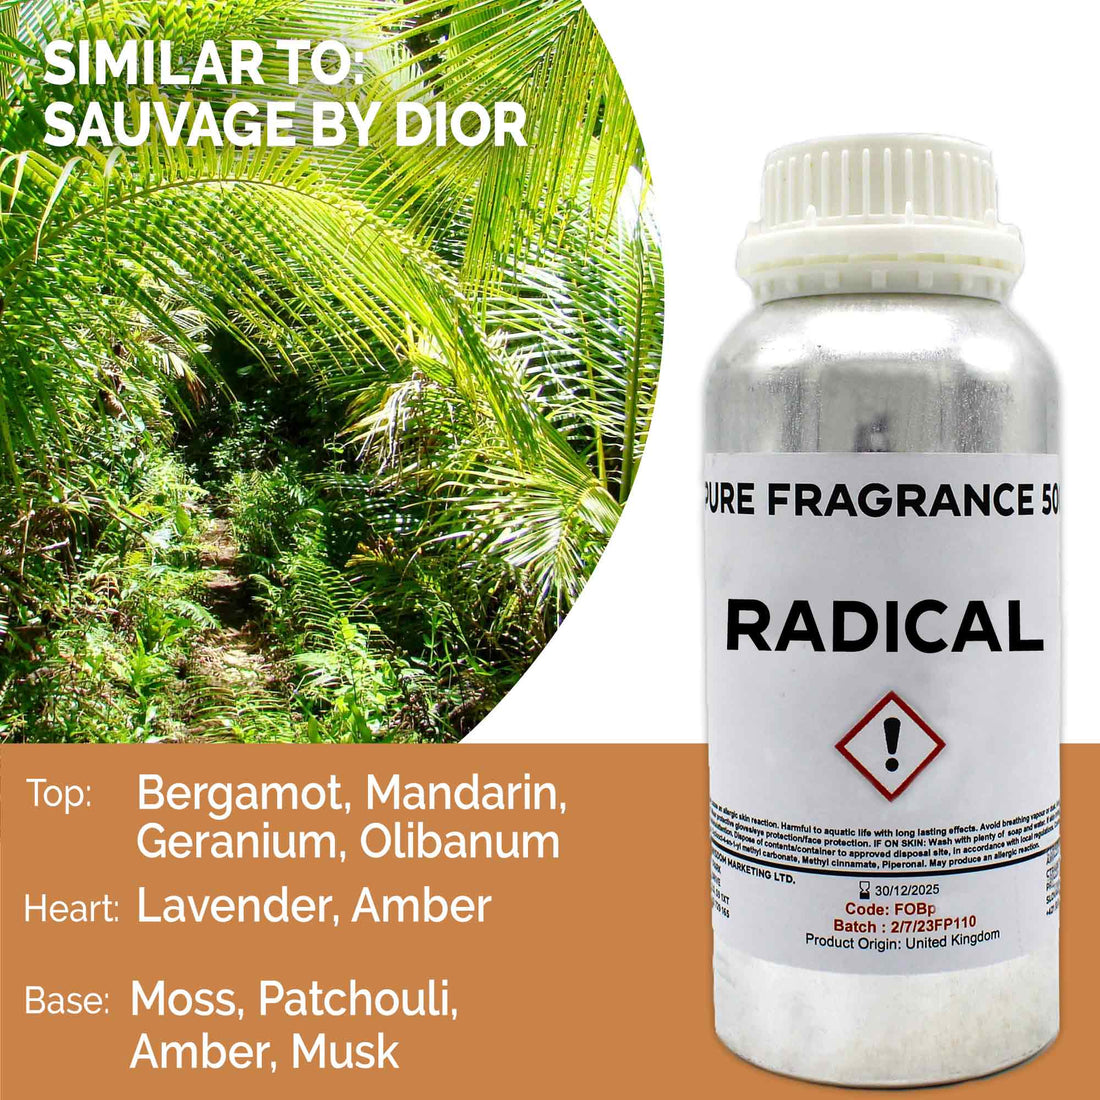 Radical Pure Fragrance Oil - 500ml